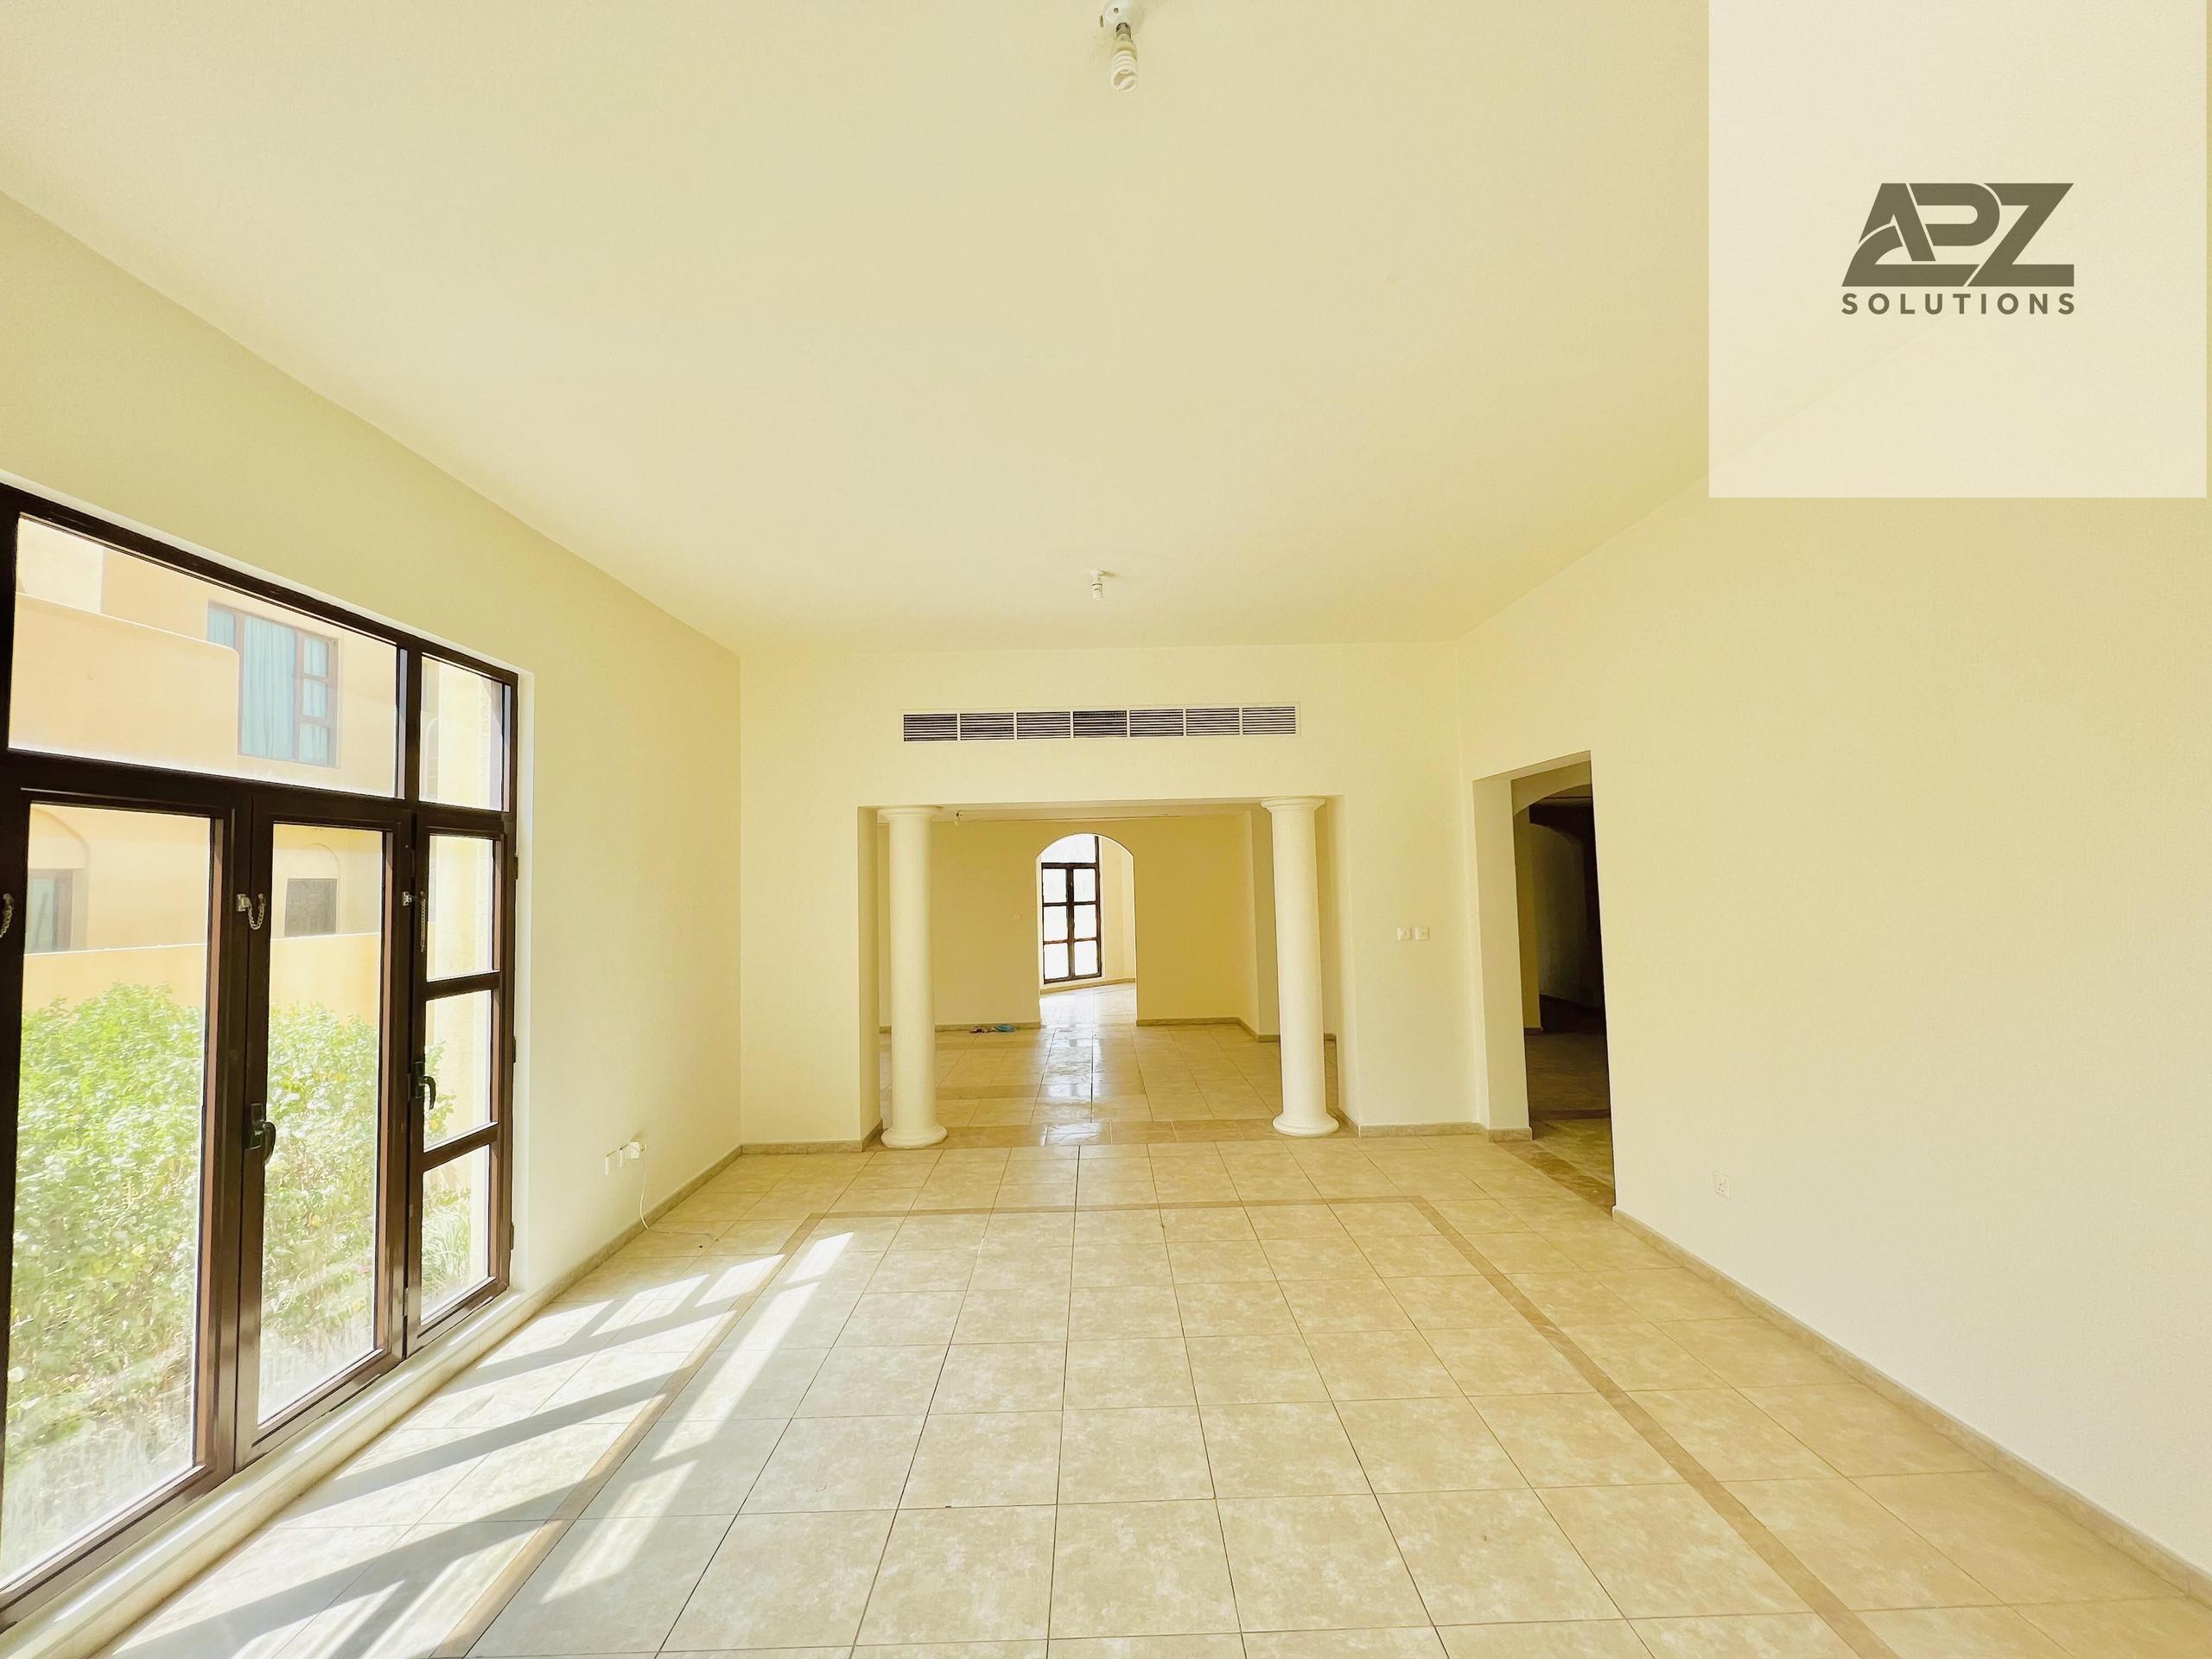 Real Estate_Villas for Rent_Sas Al Nakhl